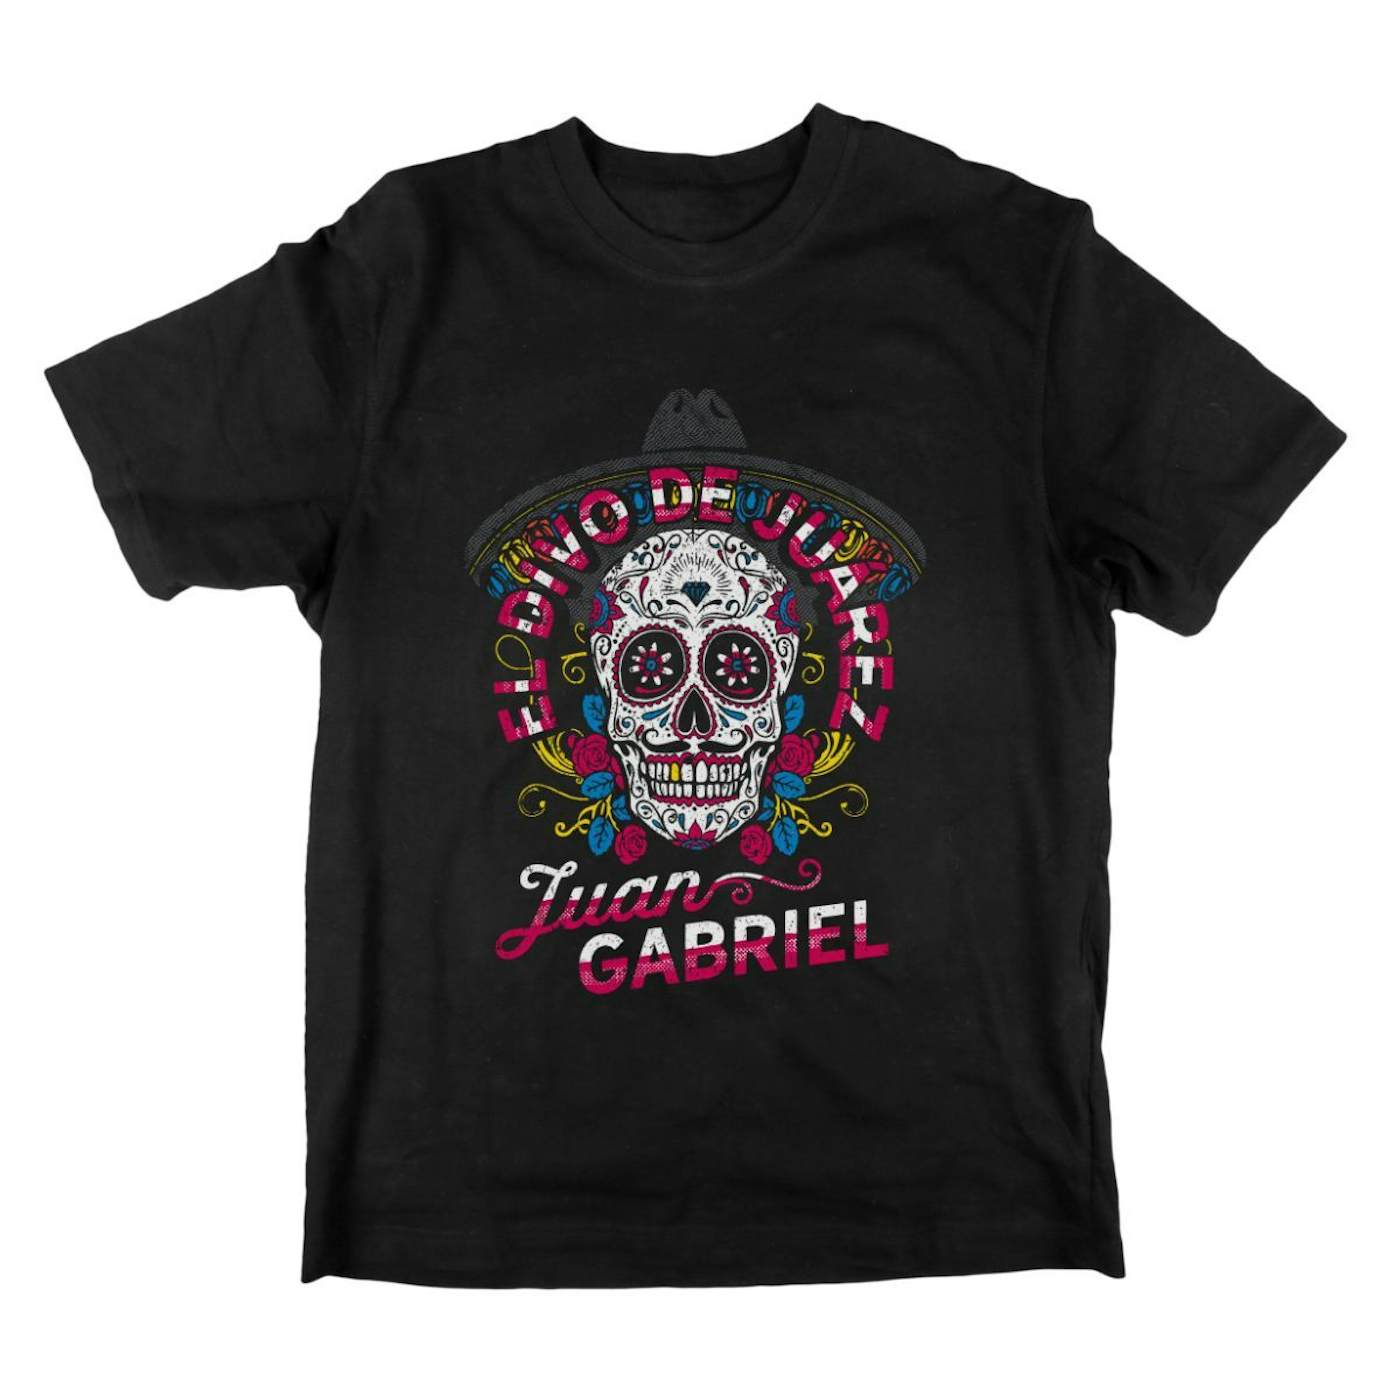 Juan Gabriel Divo de Juarez Troubador T-Shirt